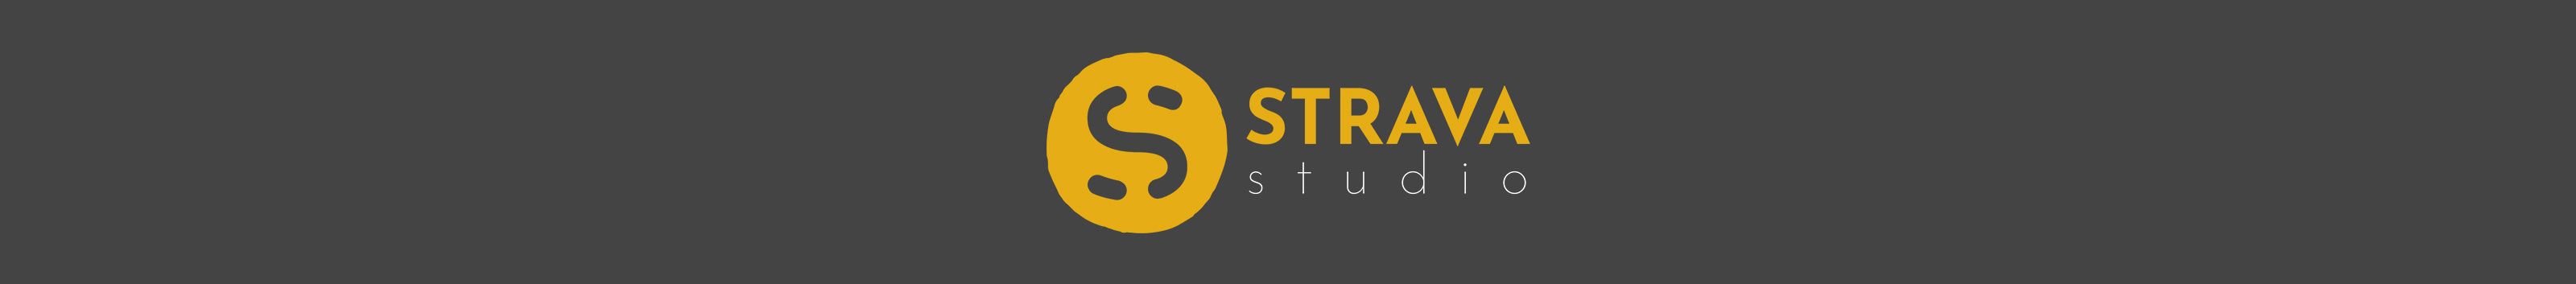 Strava Studio's profile banner